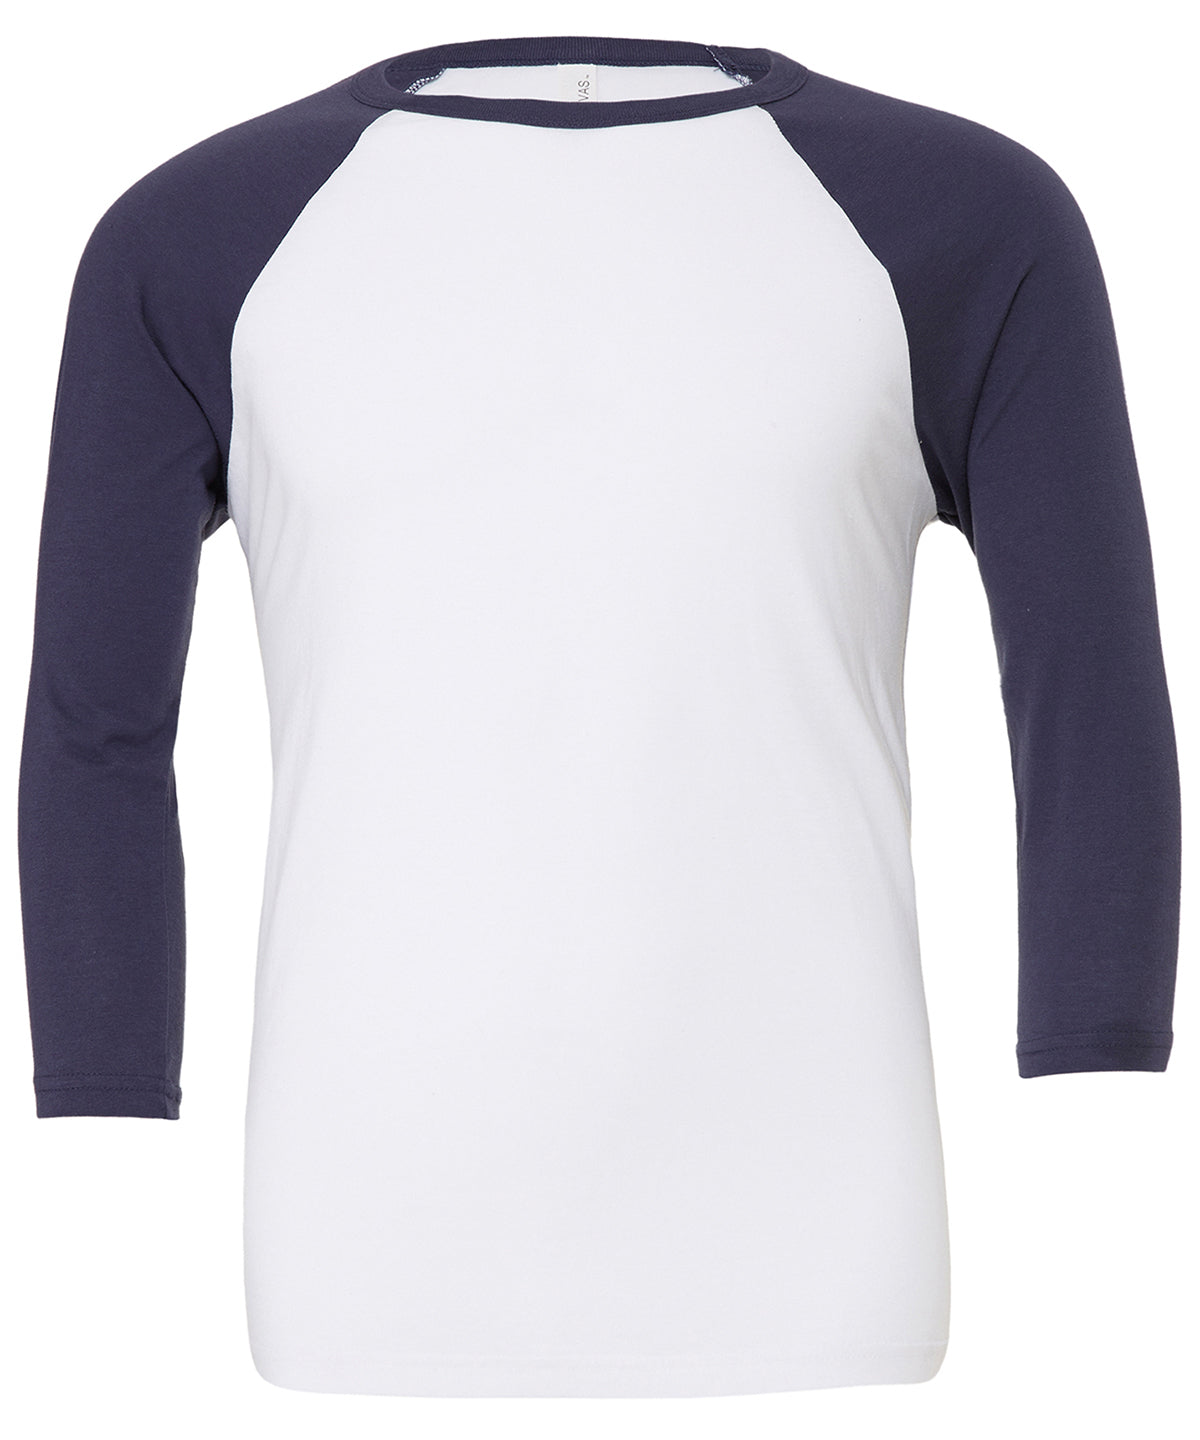 Personalised T-Shirts - Black Bella Canvas Unisex triblend ¾ sleeve baseball t-shirt